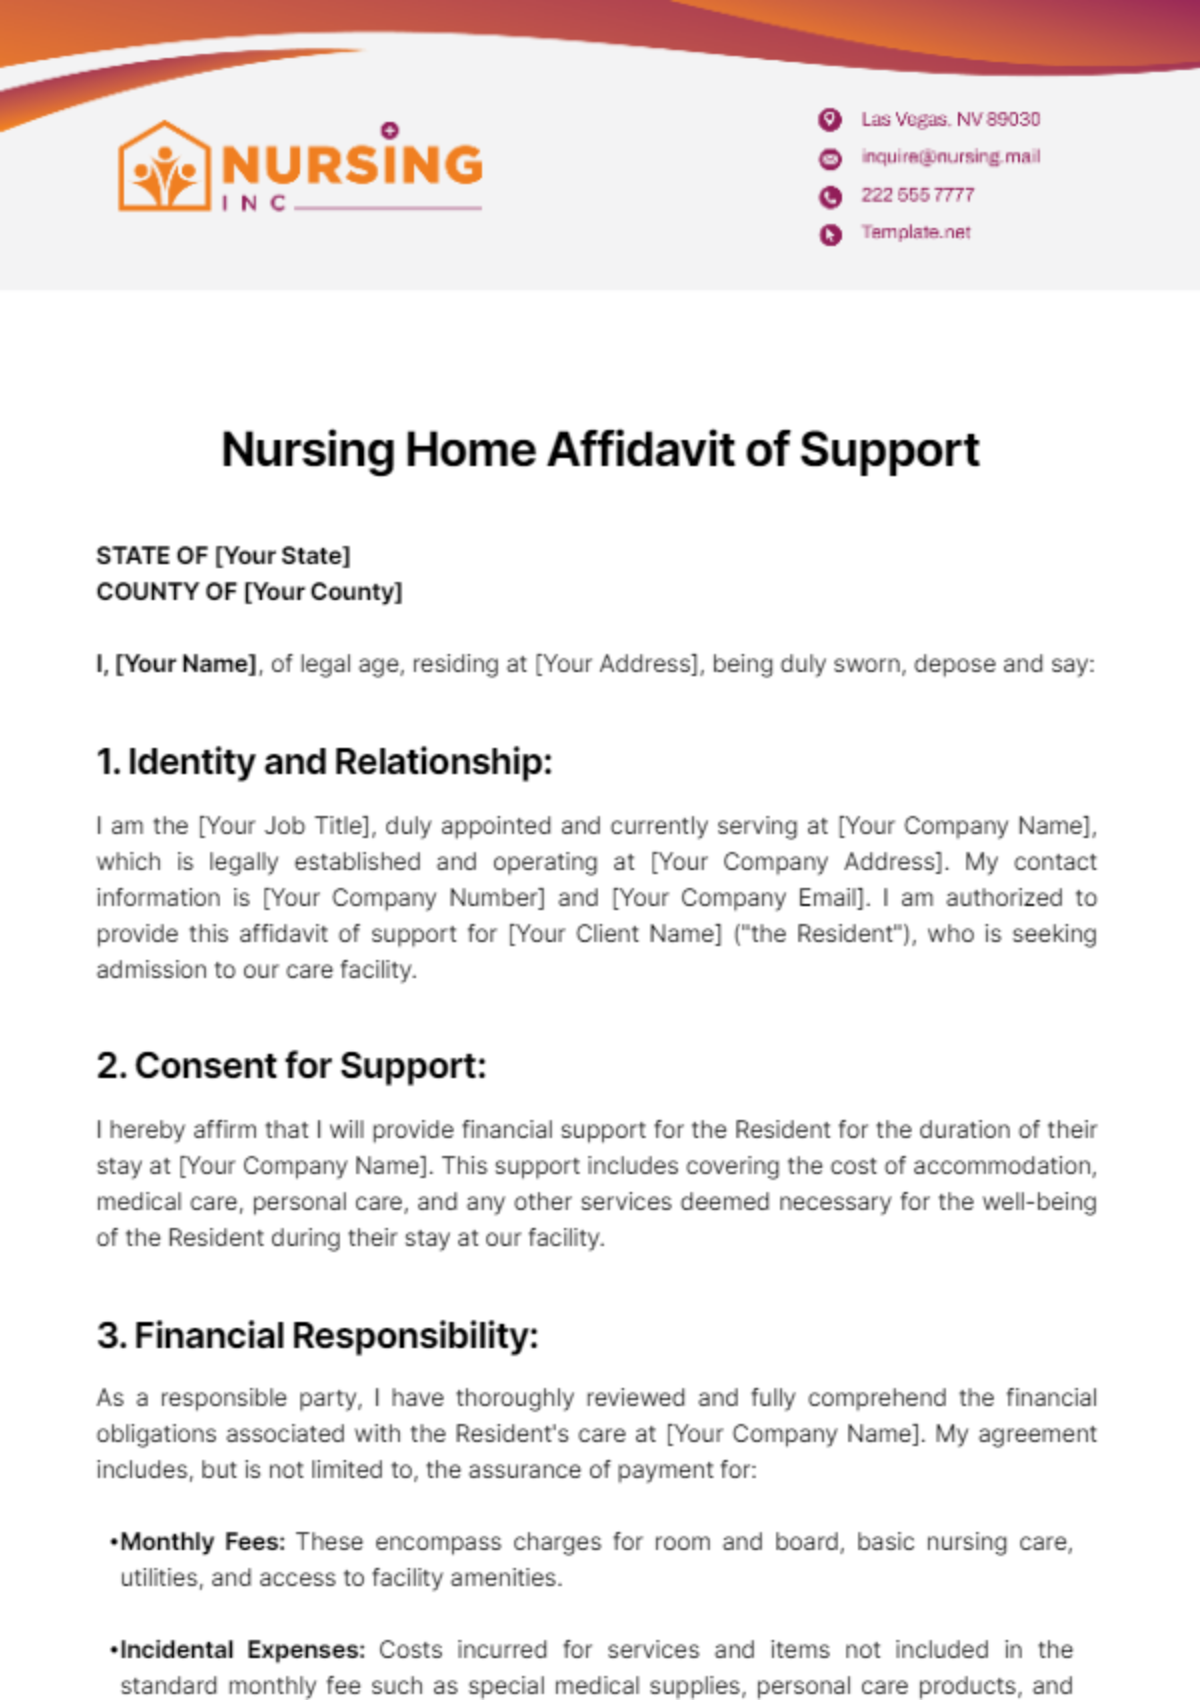 Nursing Home Affidavit of Support Template